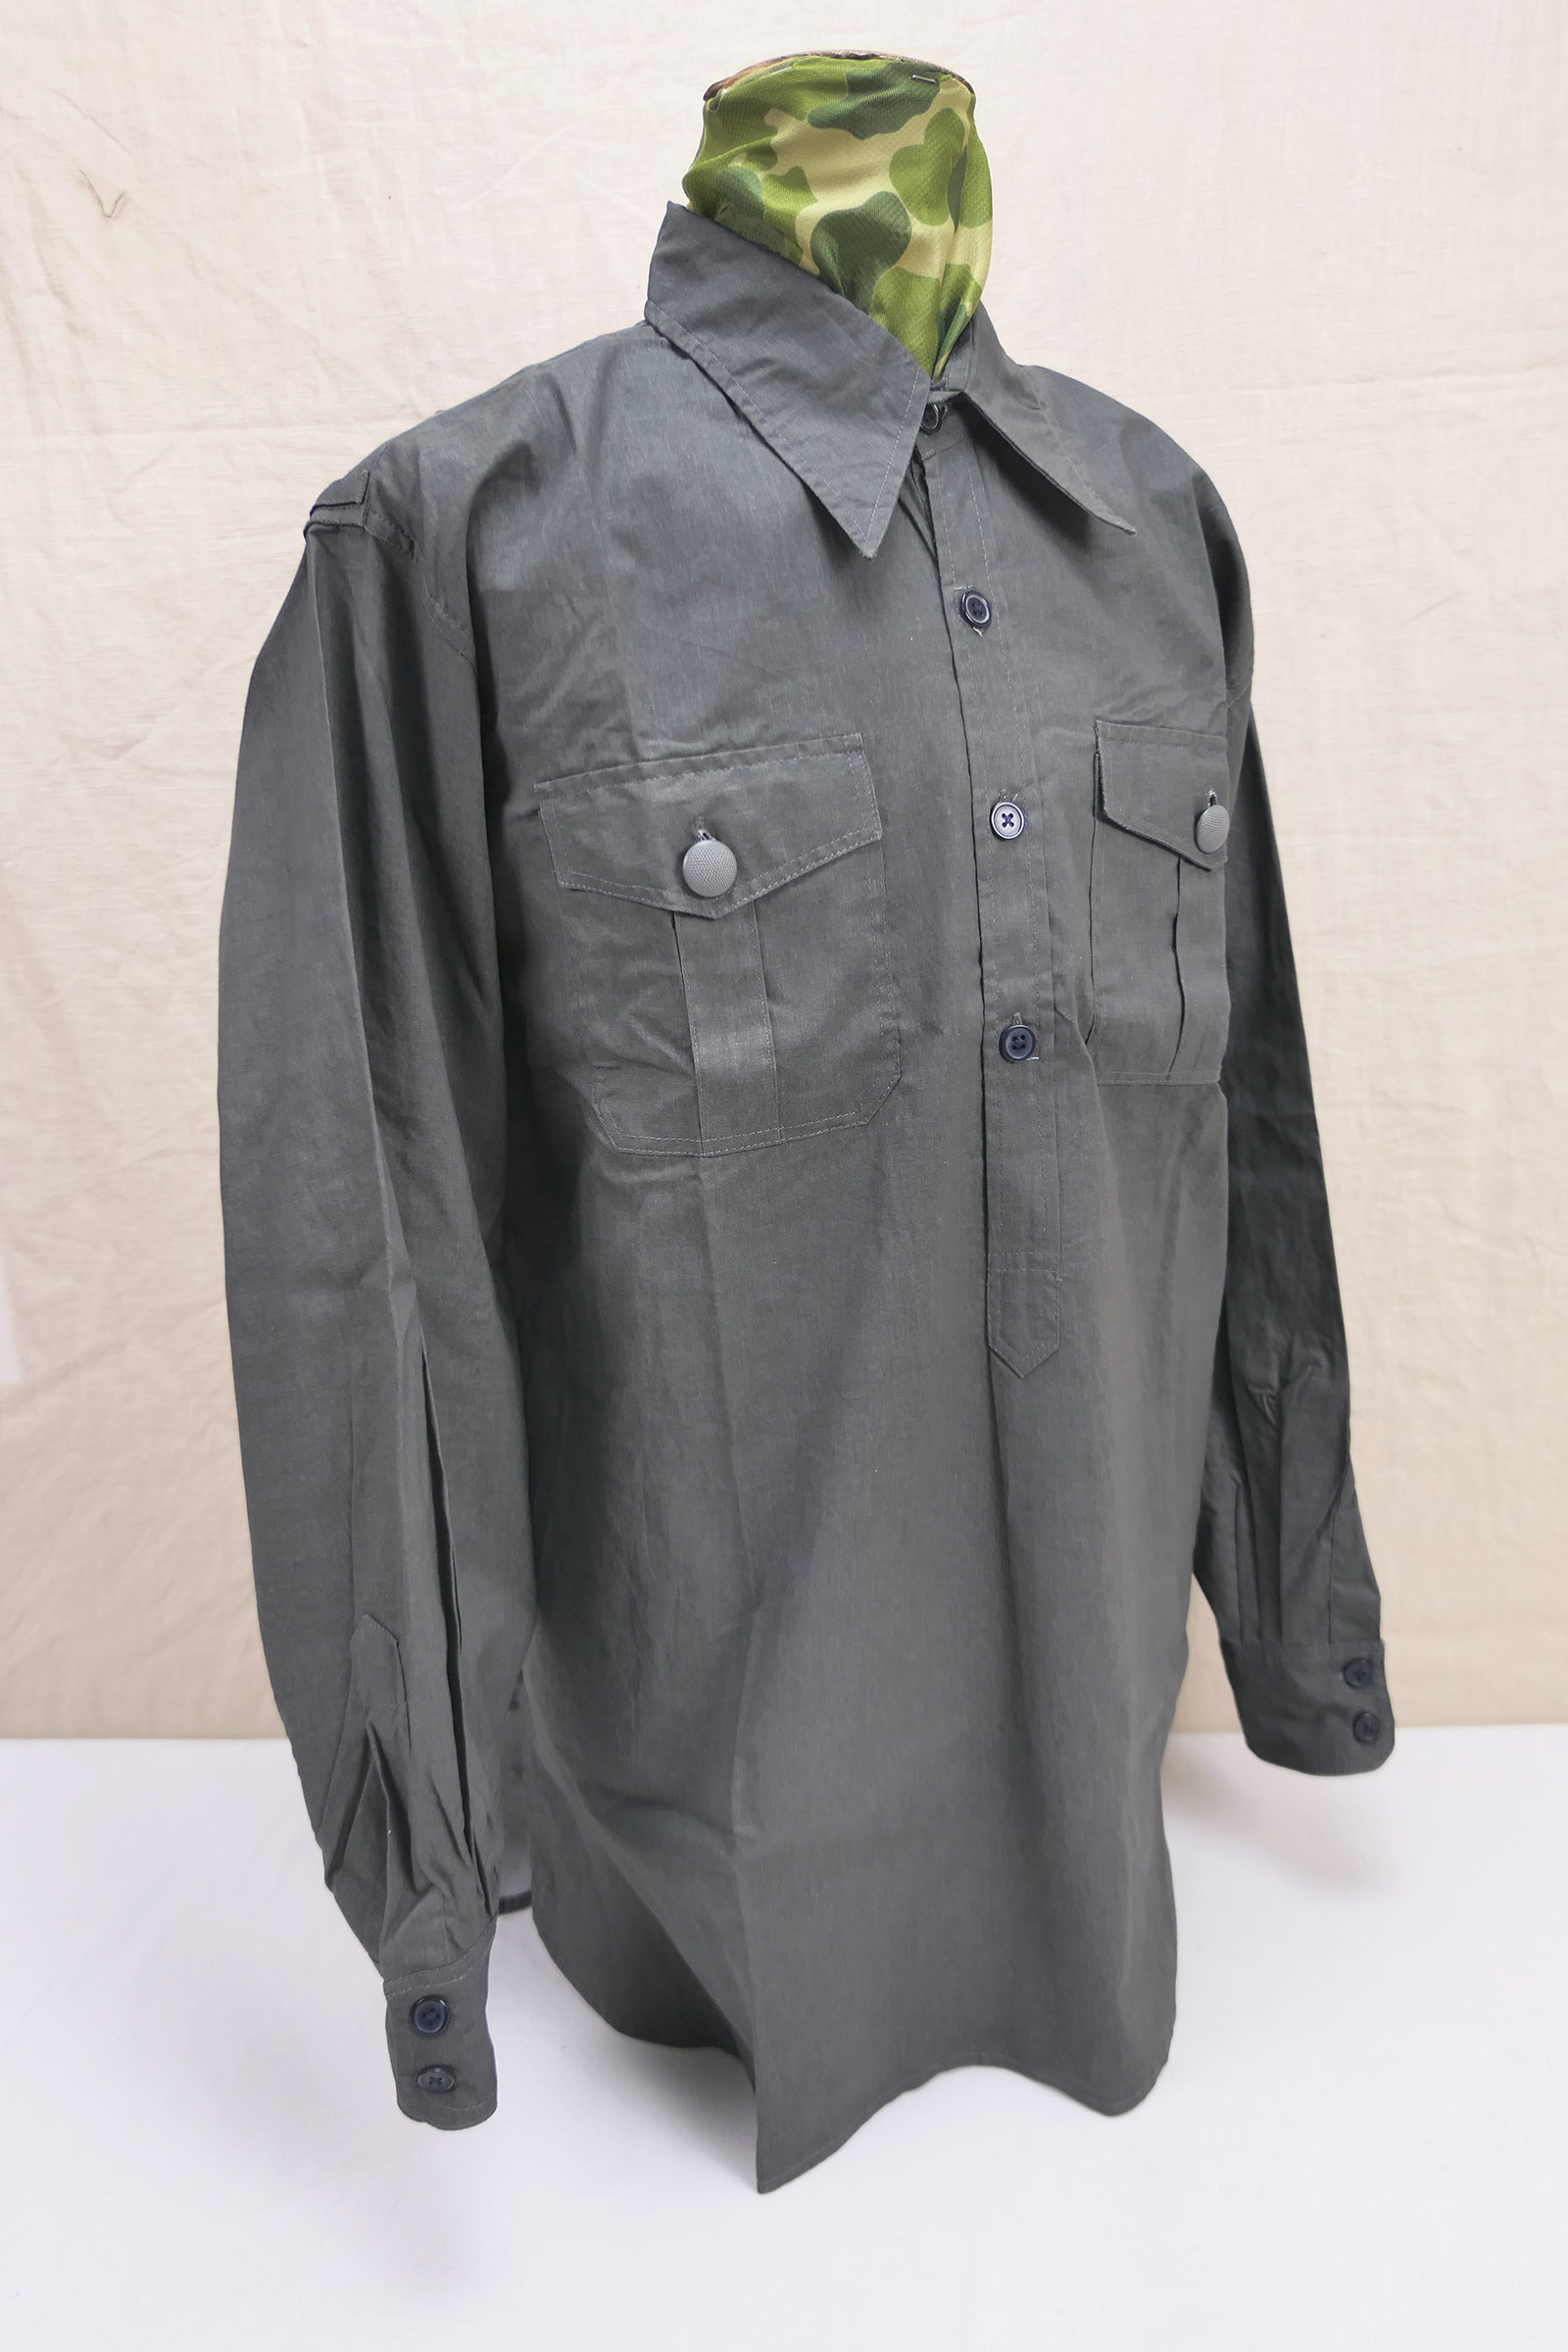 Army Chino Shirt Tropenhemd Service Hemd Vintage Fieldshirt Diensthemd uniform 